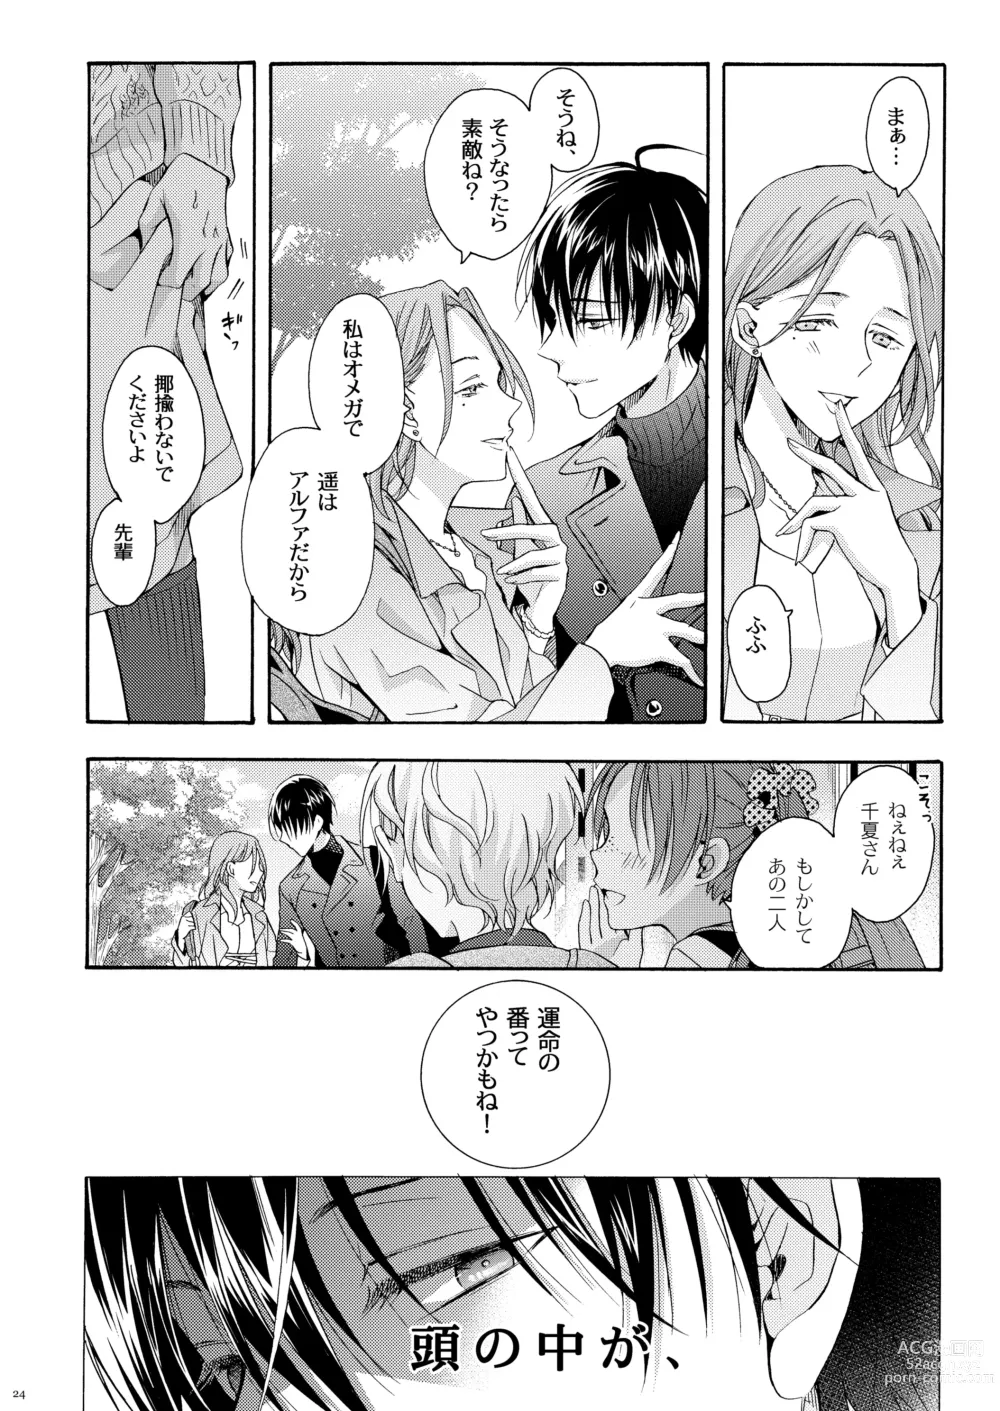 Page 23 of manga Boku no Tame no Omega